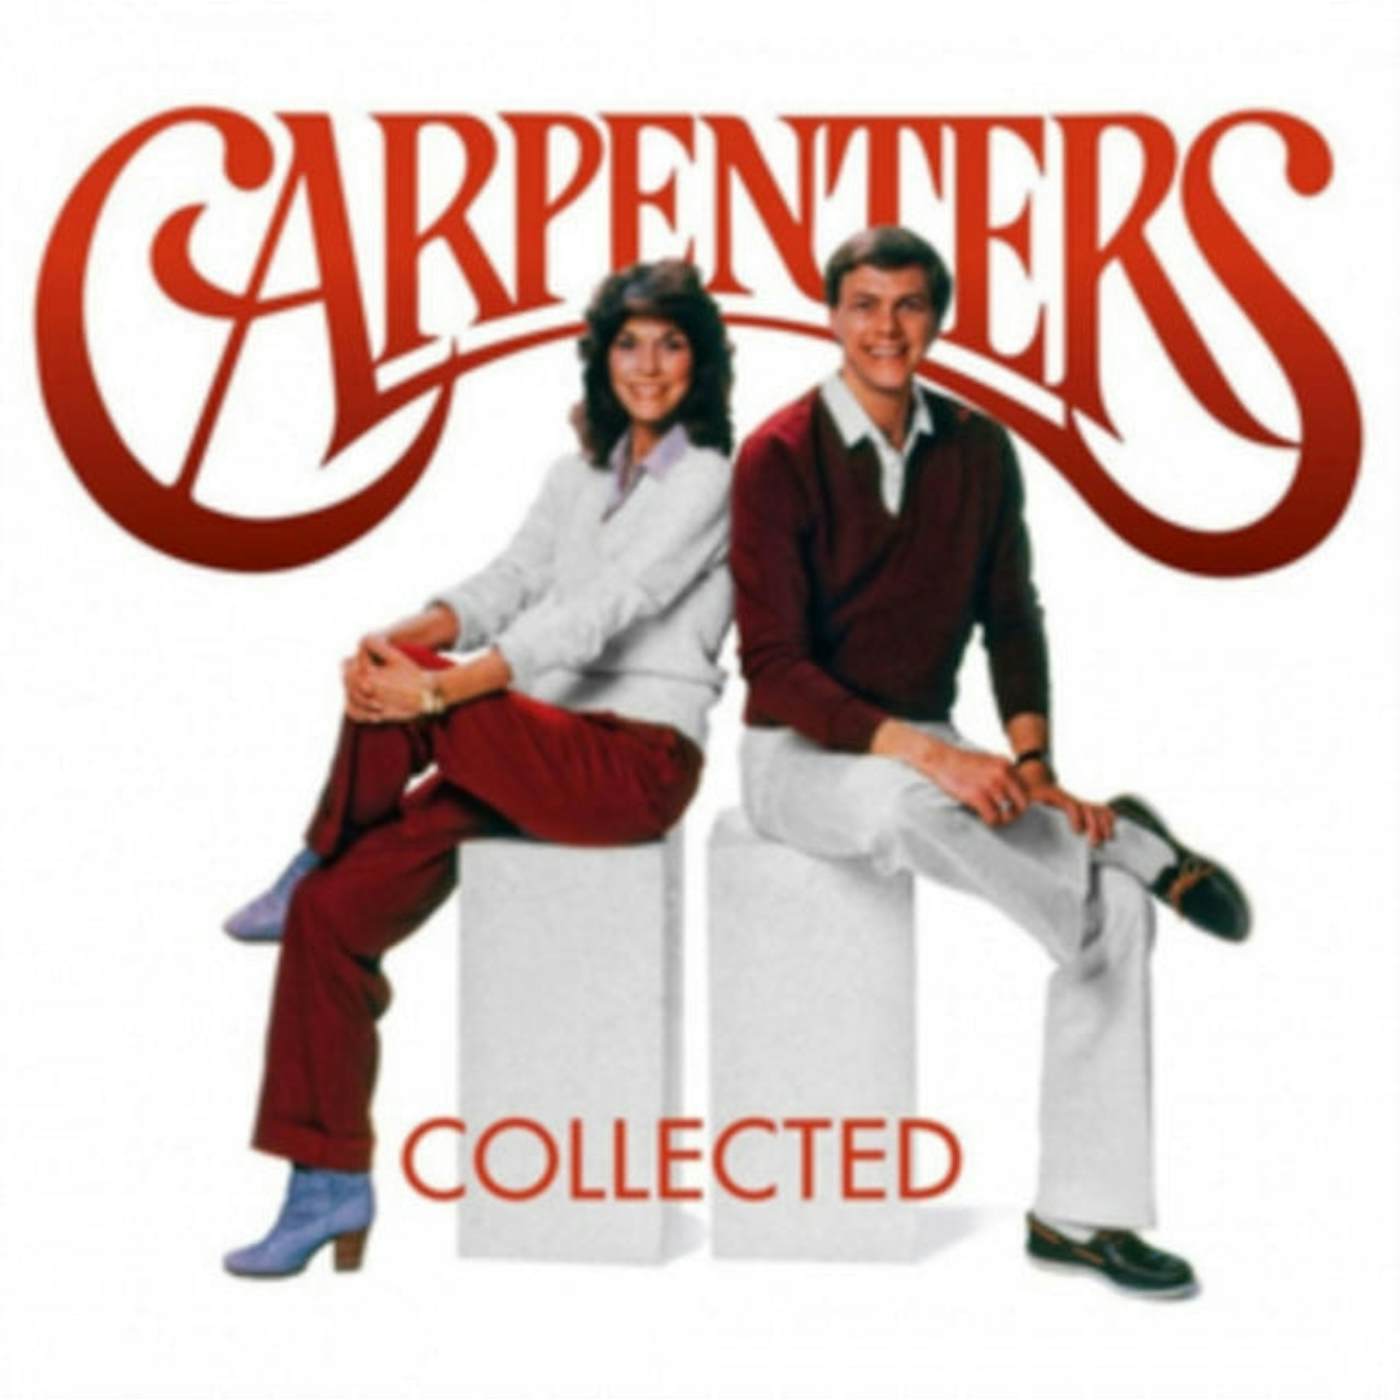 Carpenters LP Vinyl Record - Collected